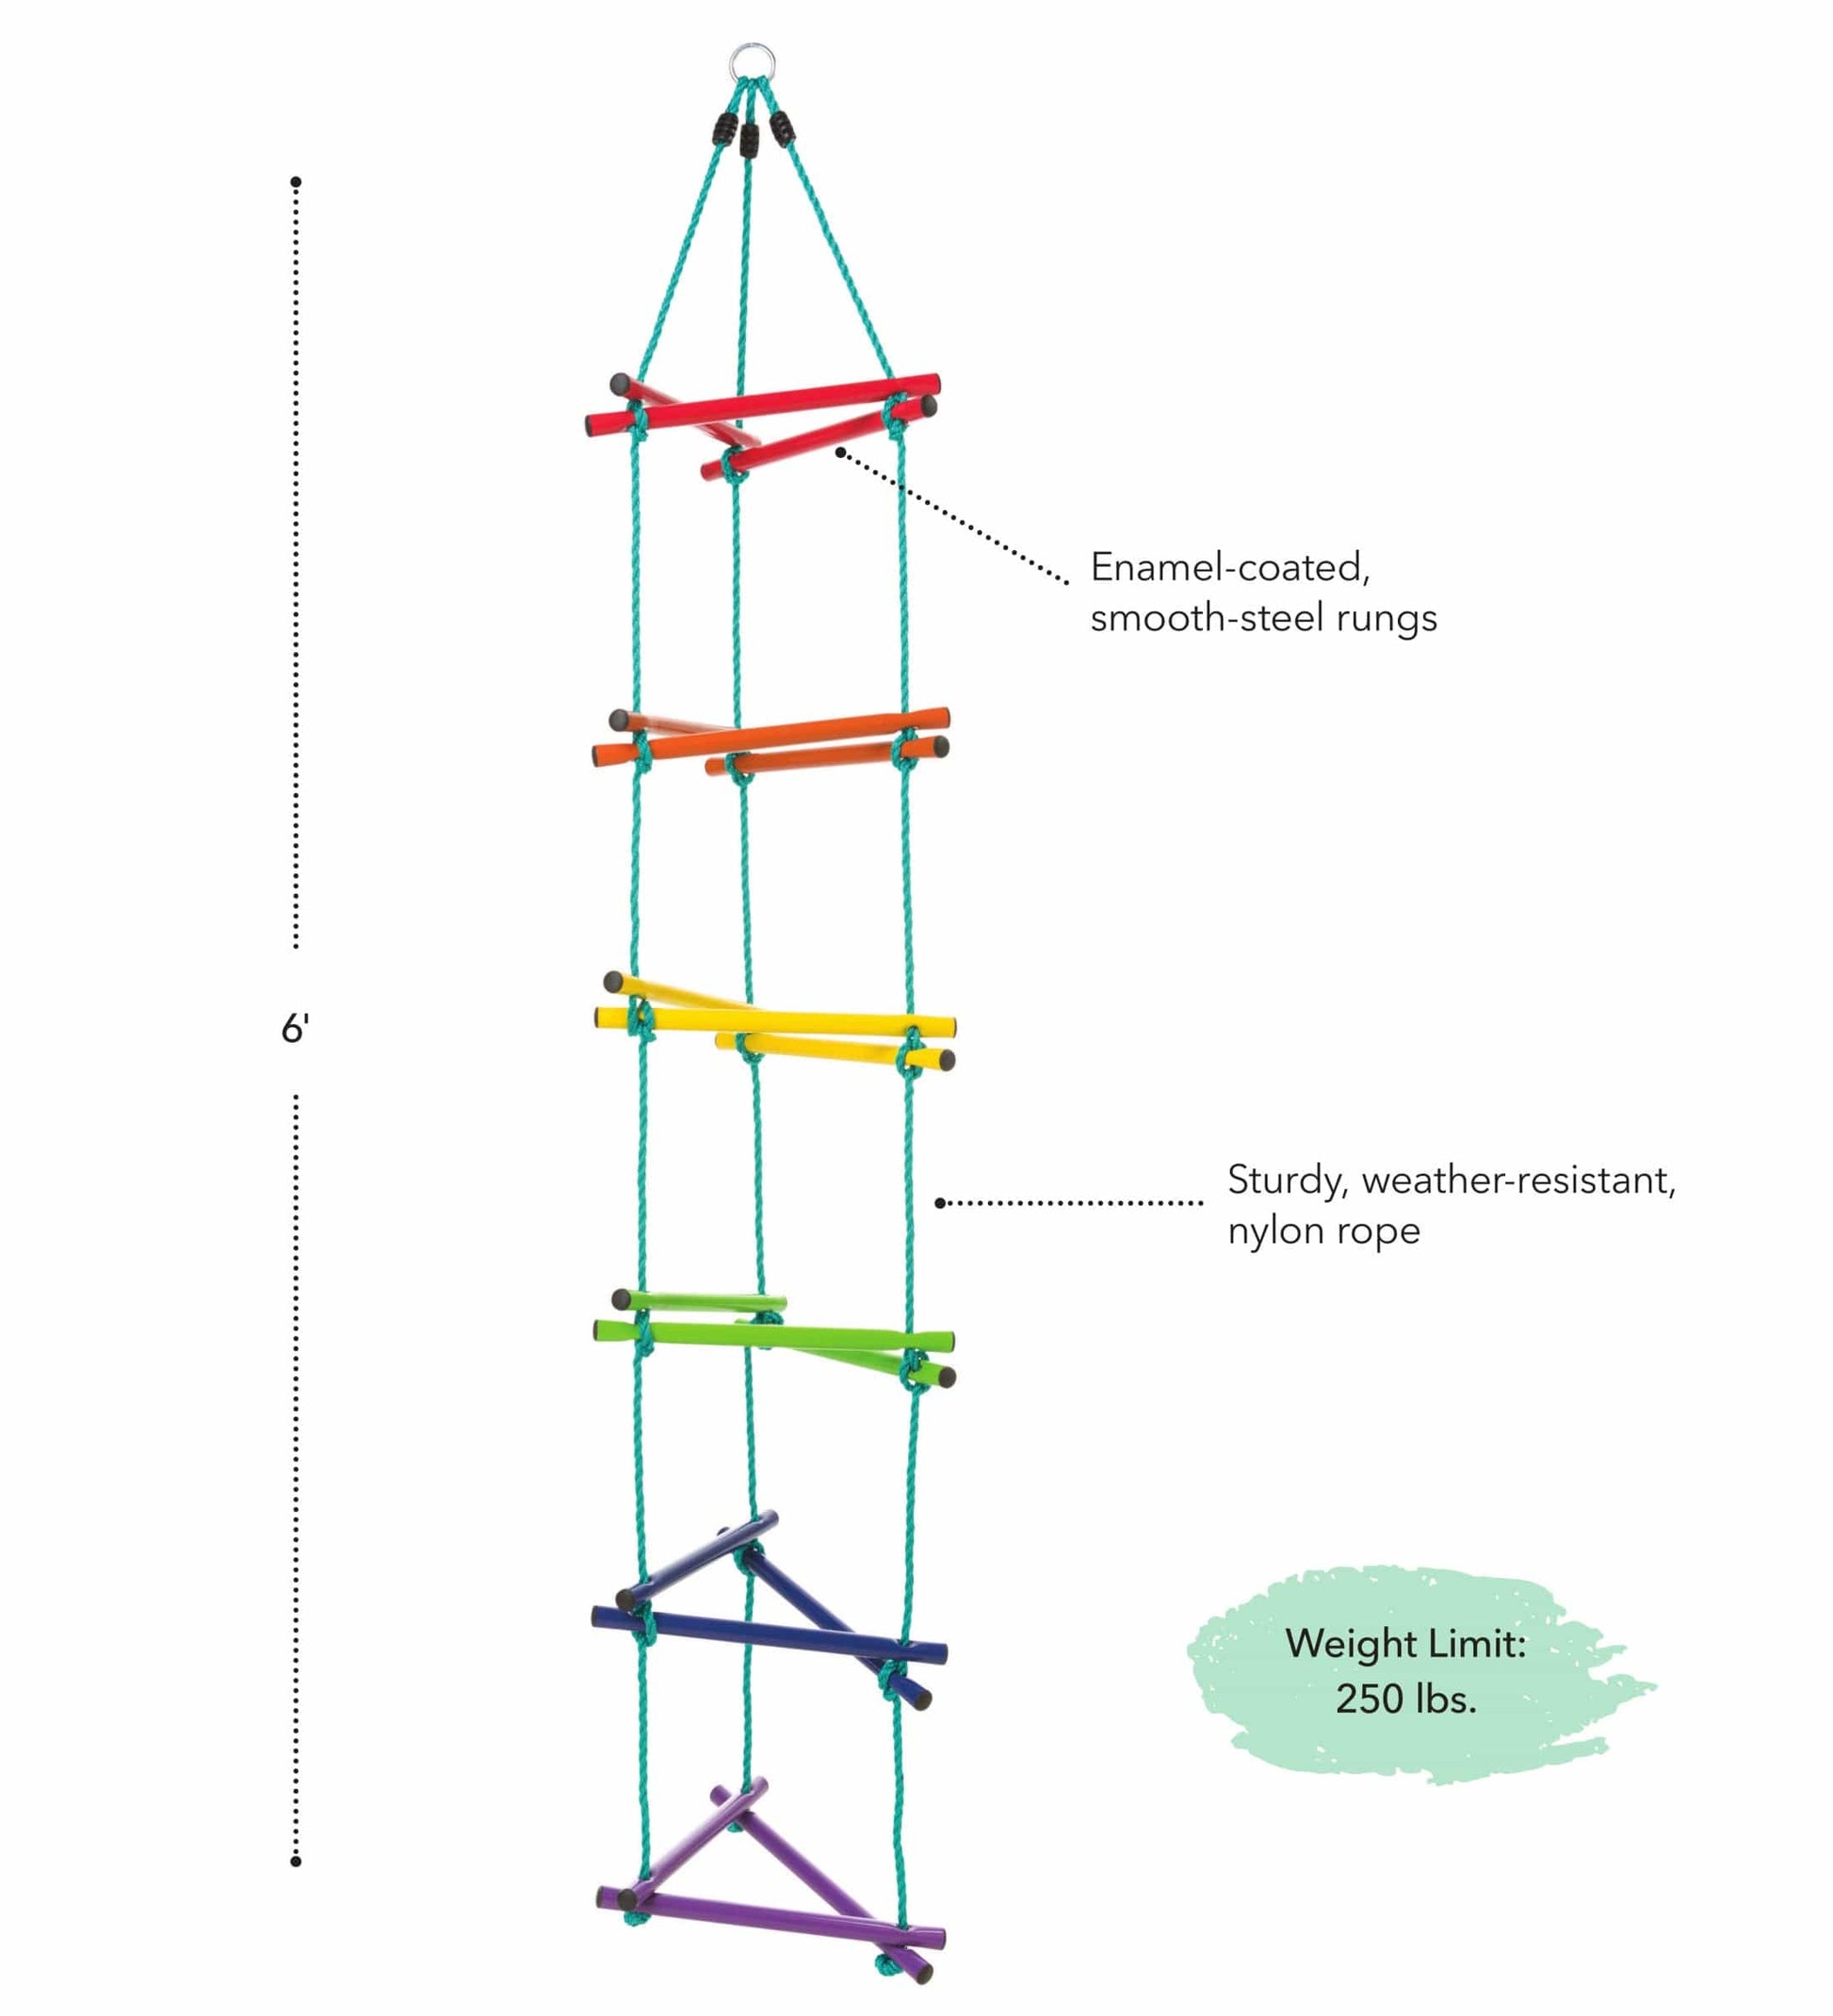 Ladder Rungs Rainbow Stock Illustrations – 6 Ladder Rungs Rainbow